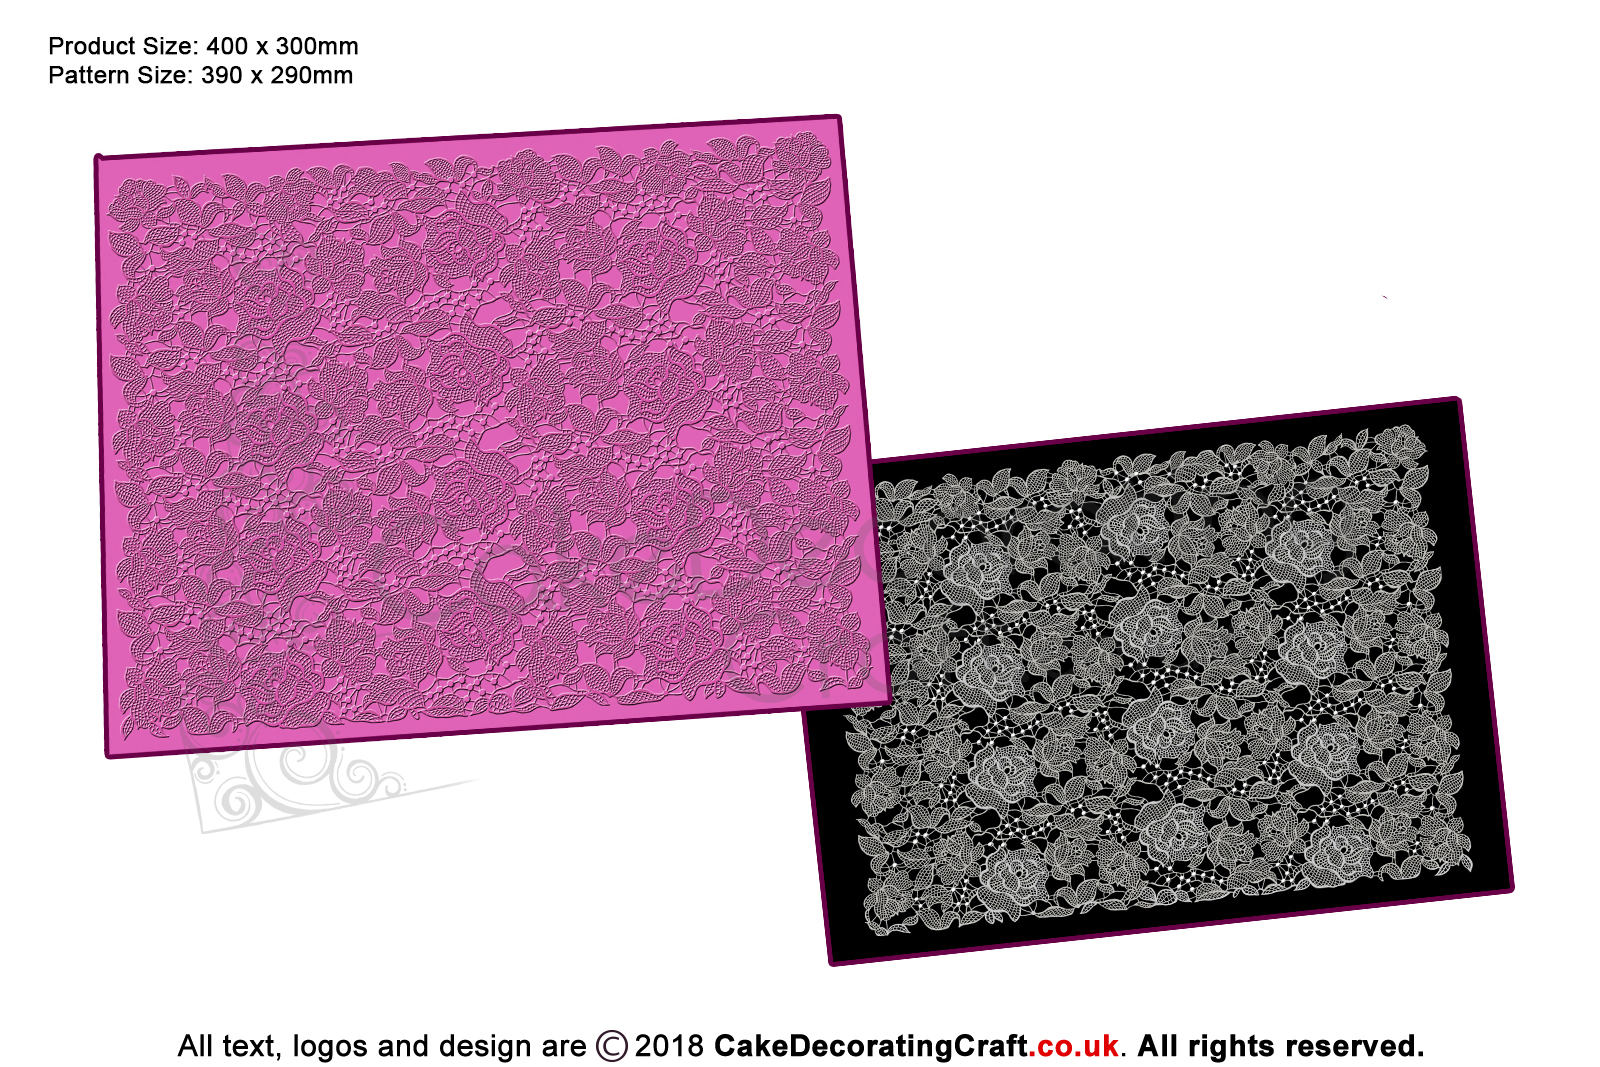 Rose Fabric | Cake Decorating Starter Kit | Cake Decorating Craft Tool | Cake Makers Christmas Gifts Ideas